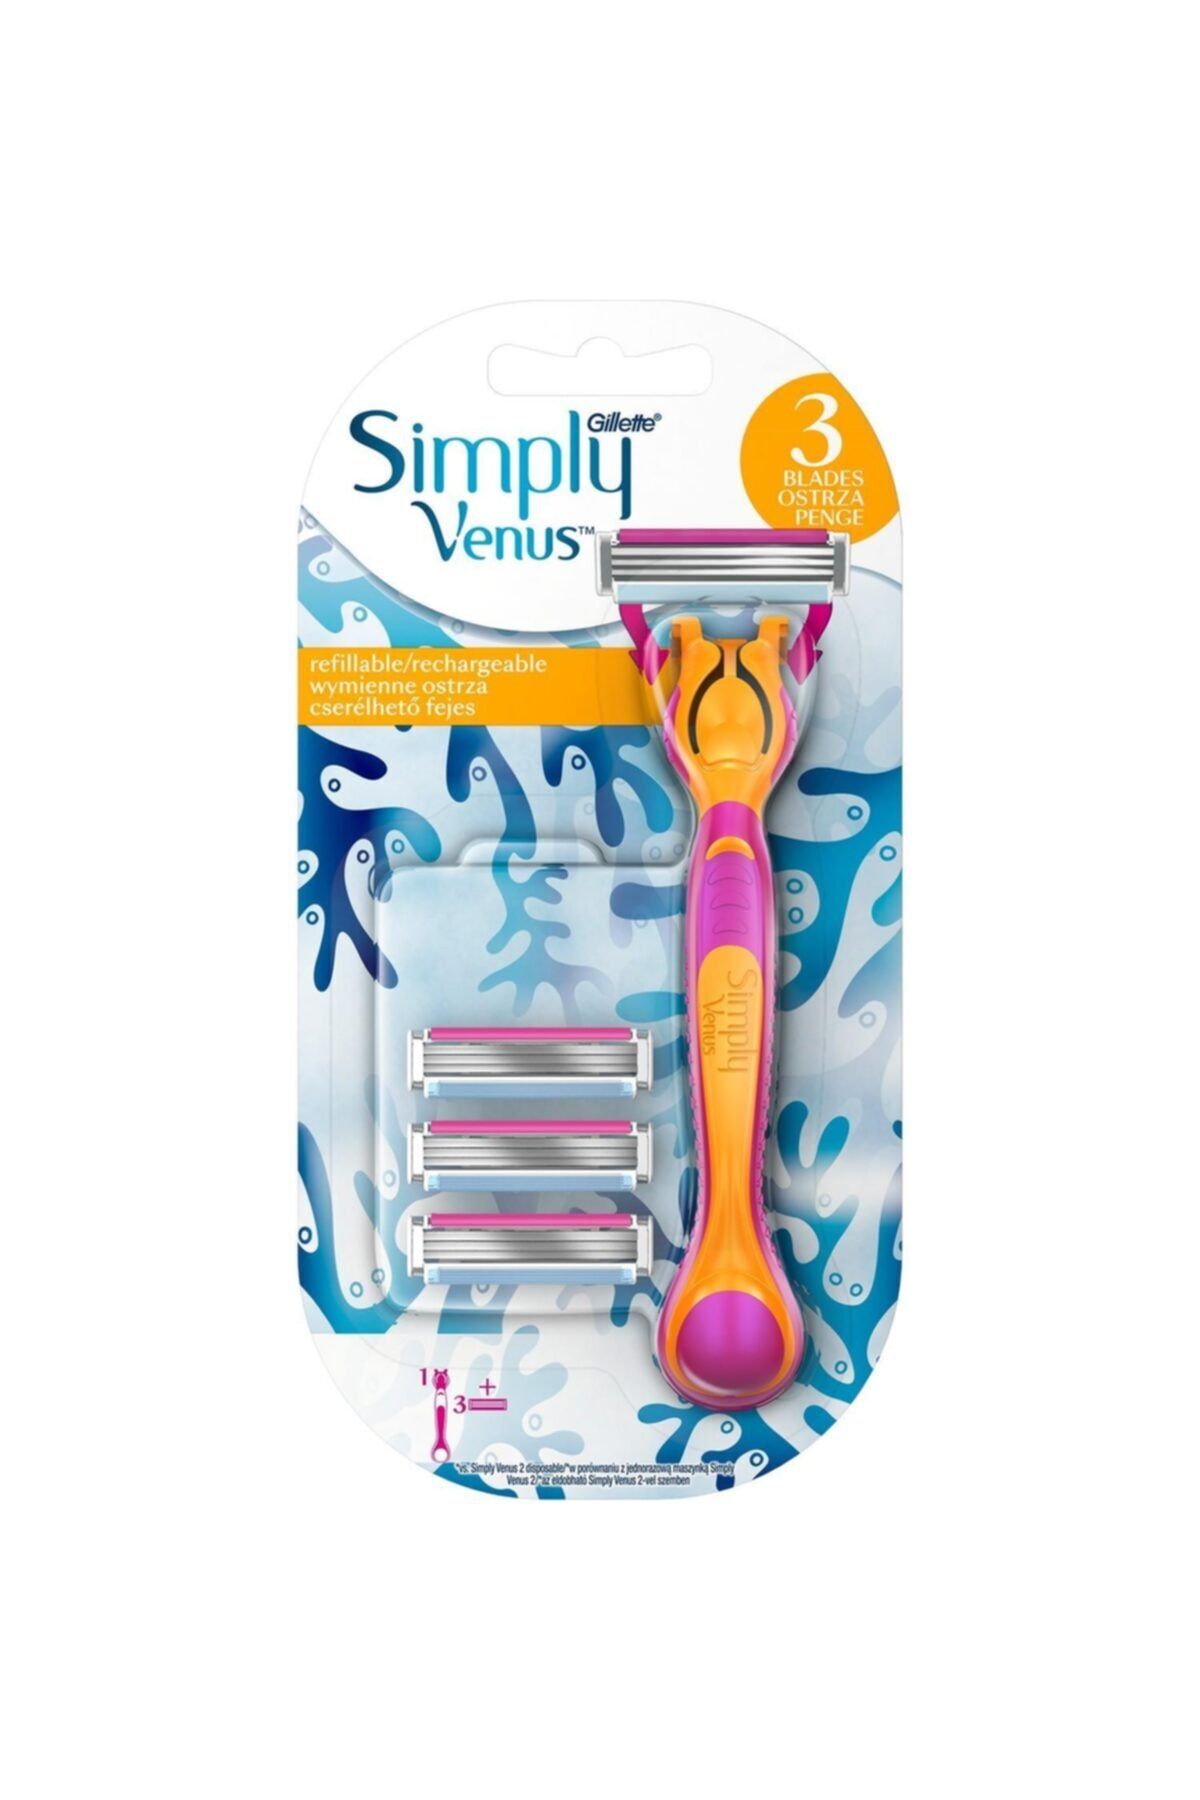 Gillette Venus Simply Venus 3 Tıraş Makinesi + 3 Yedek Tıraş Bıçağı